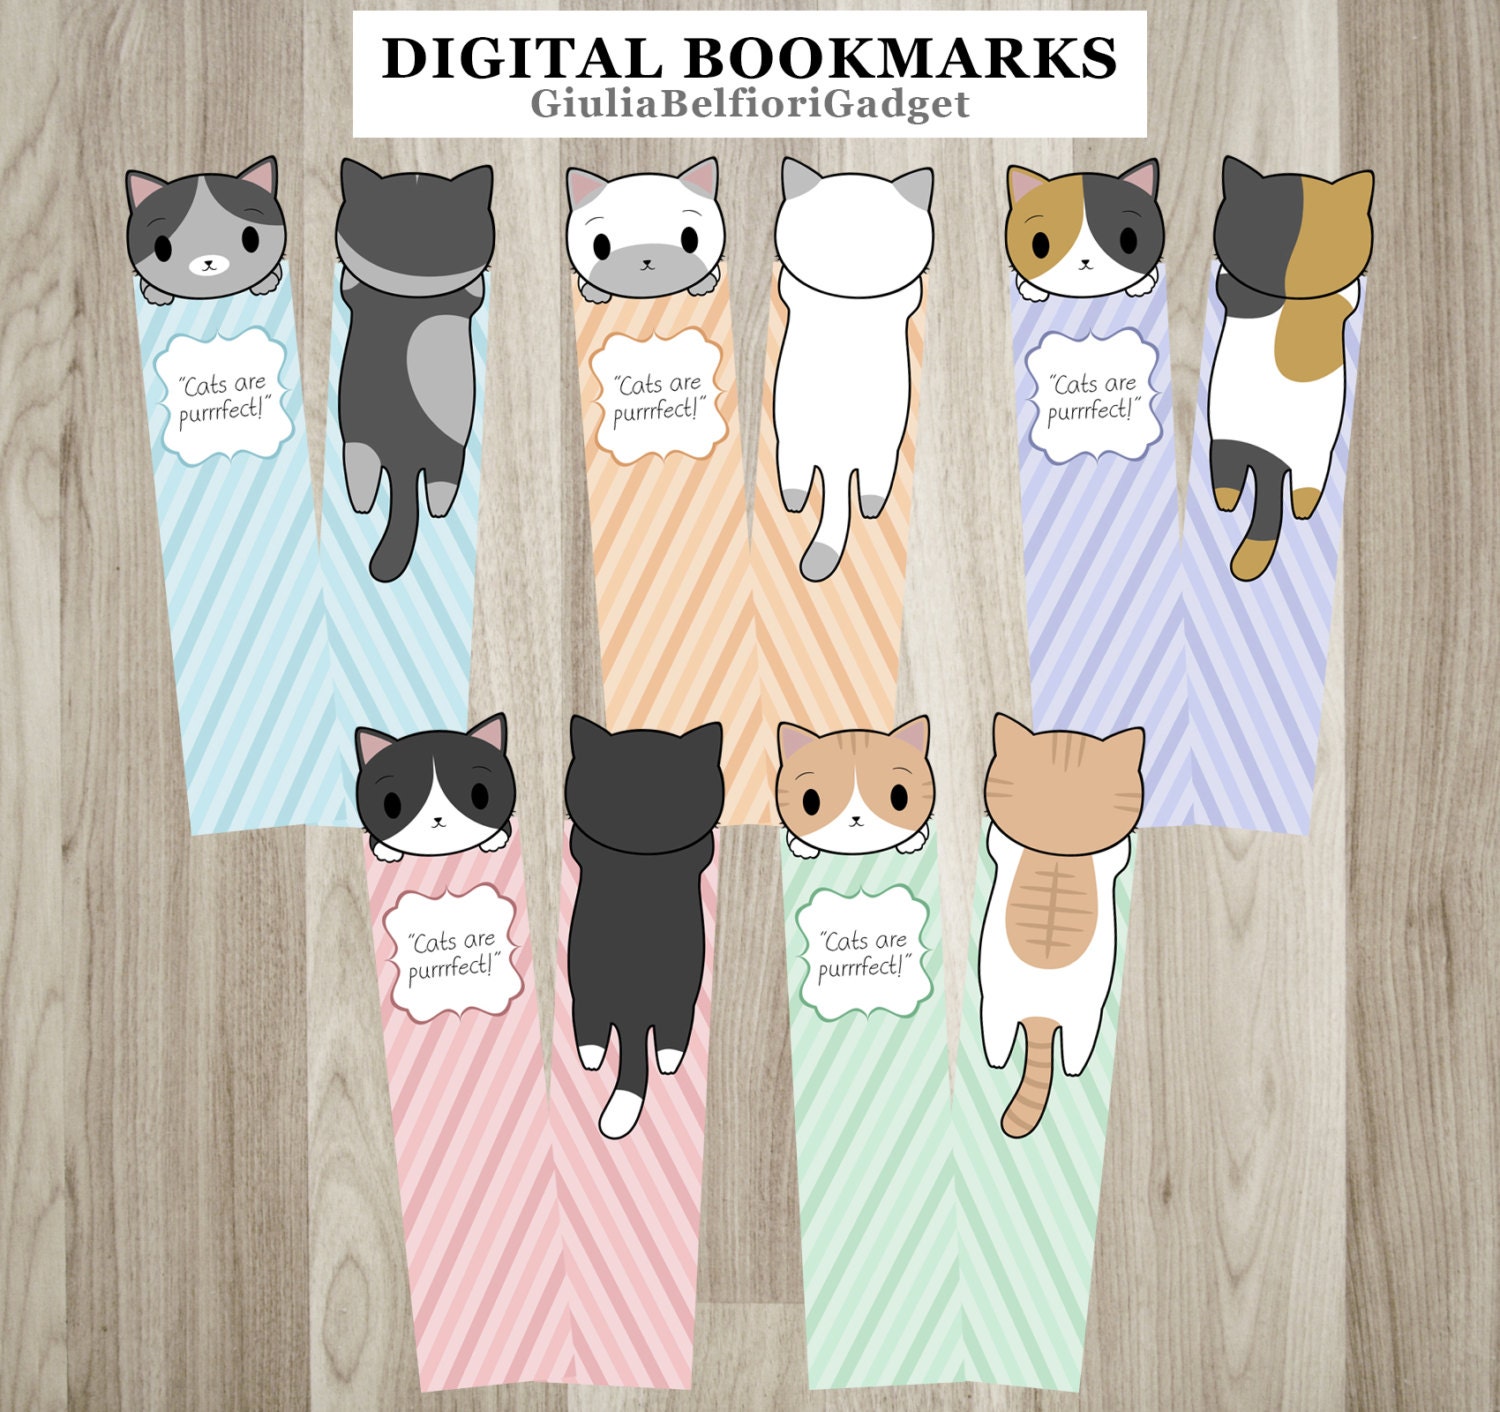 Cat bookmark digital bookmarks funny gift by GiuliaBelfioriGadget